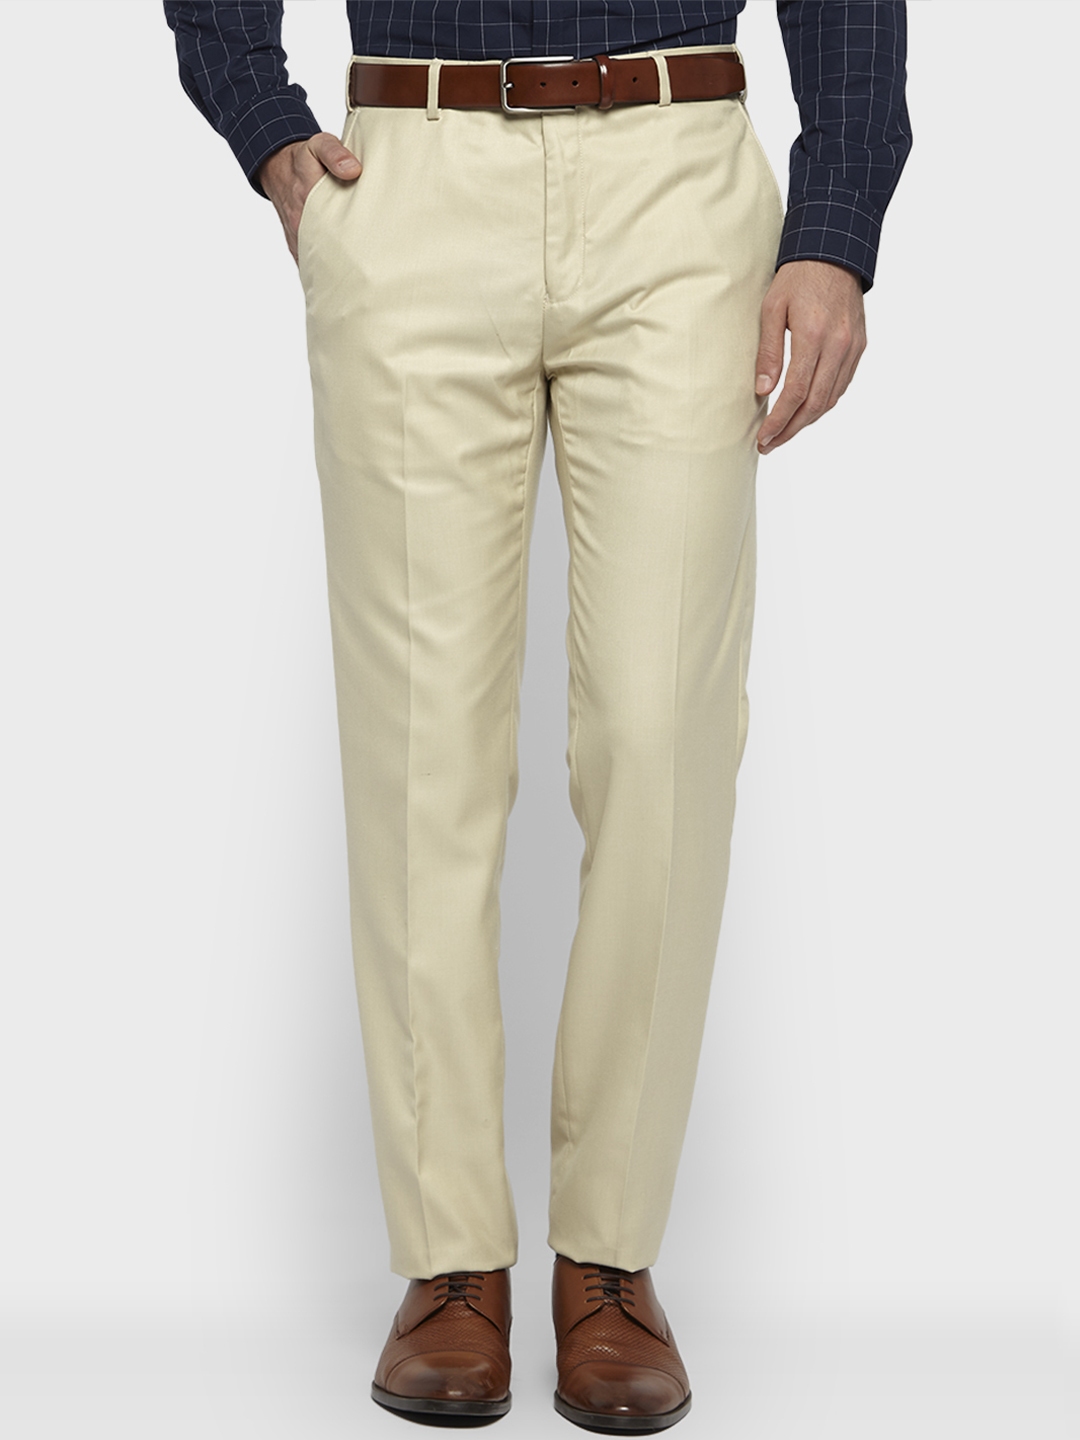 Buy Next Look Men Cream Coloured Regular Fit Solid Formal Trousers ...